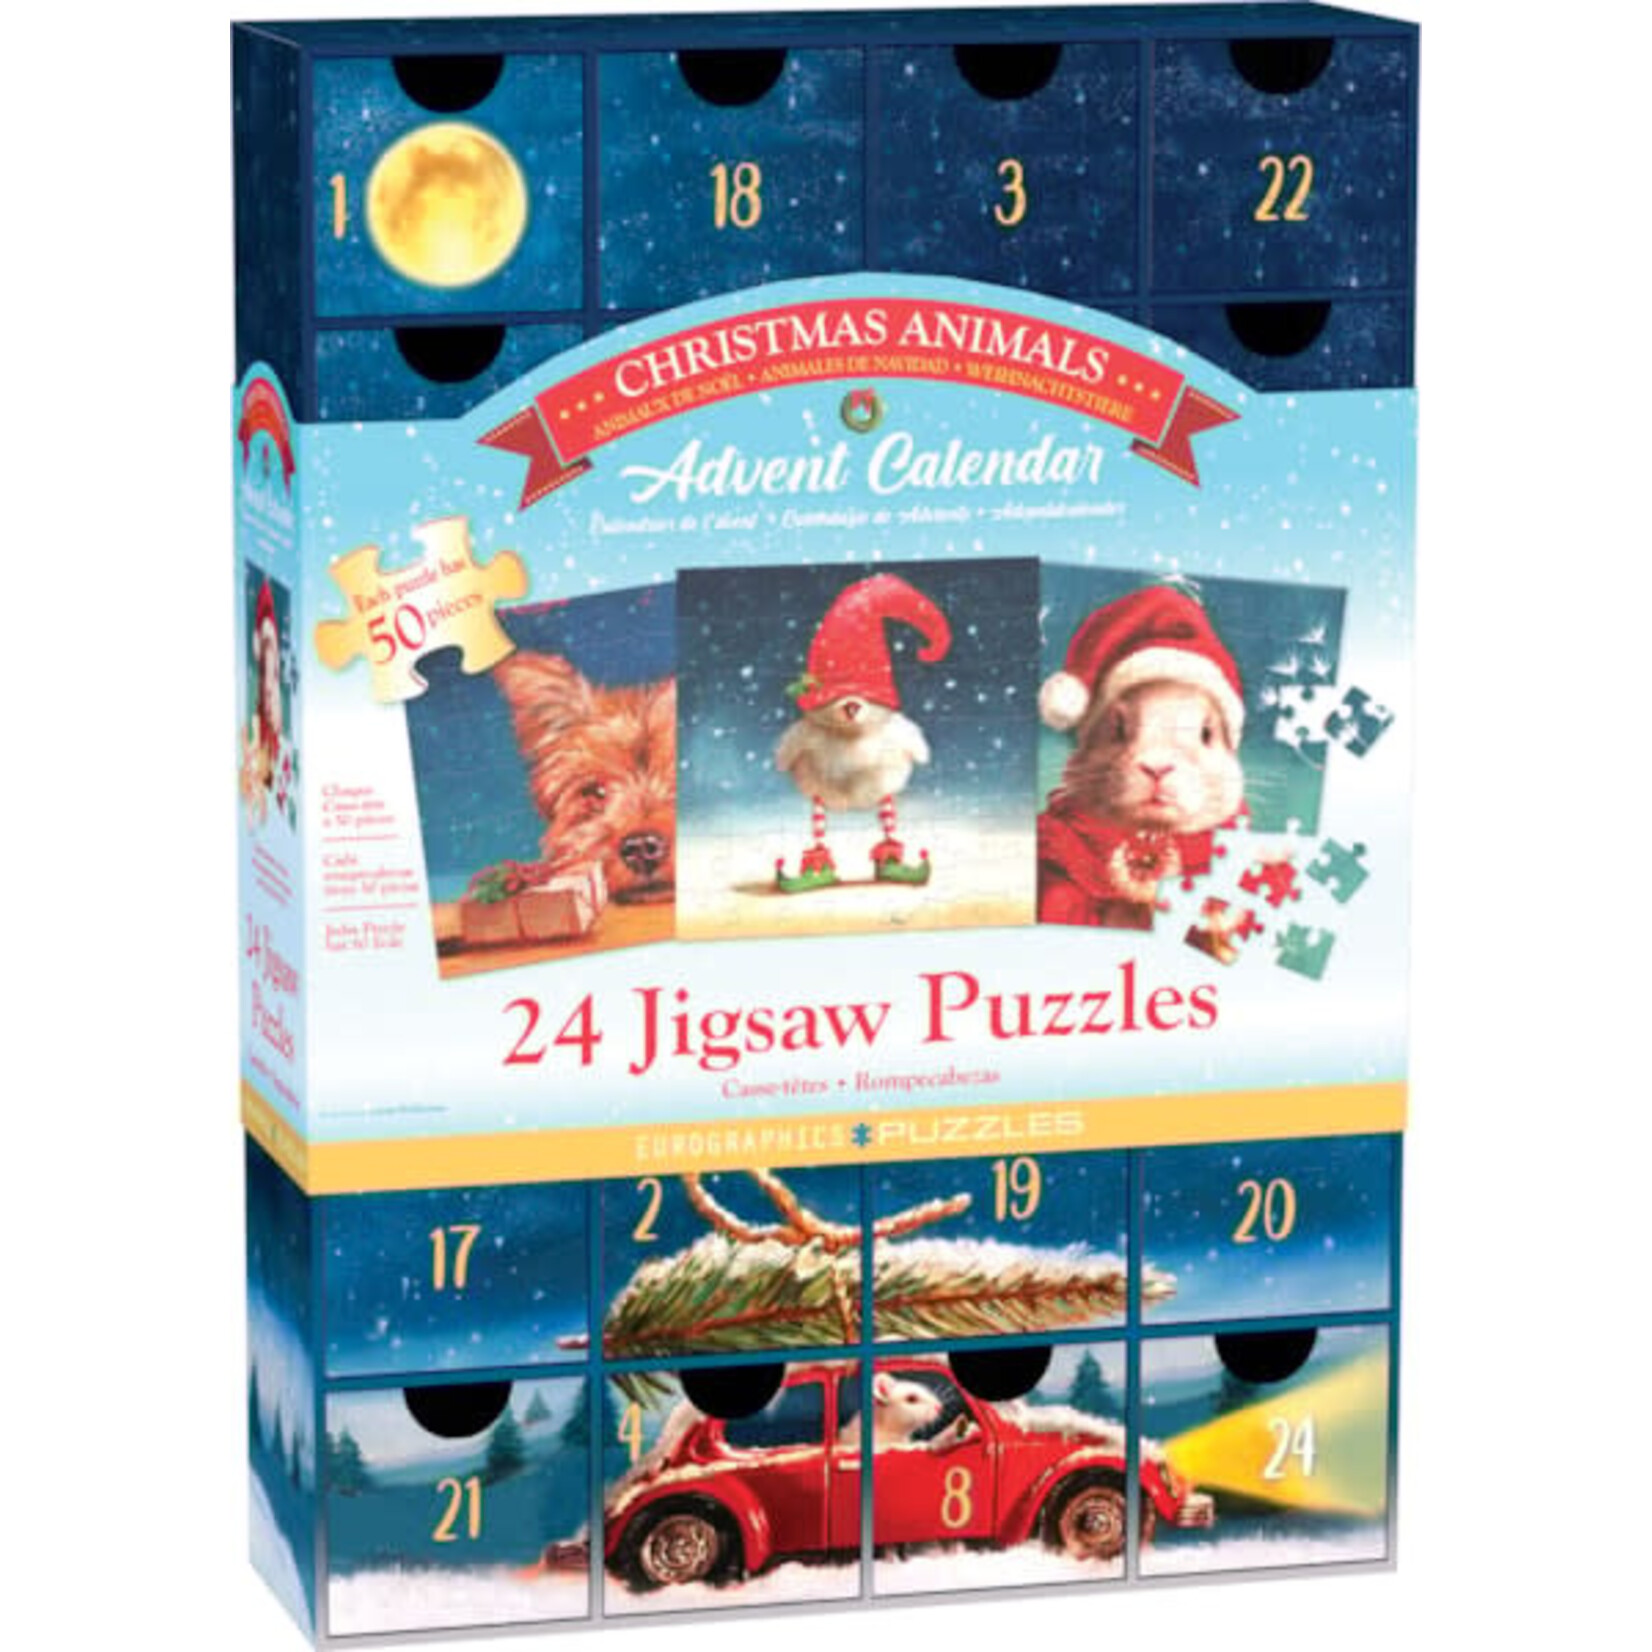 Advent Calendar Puzzles - Christmas Animals